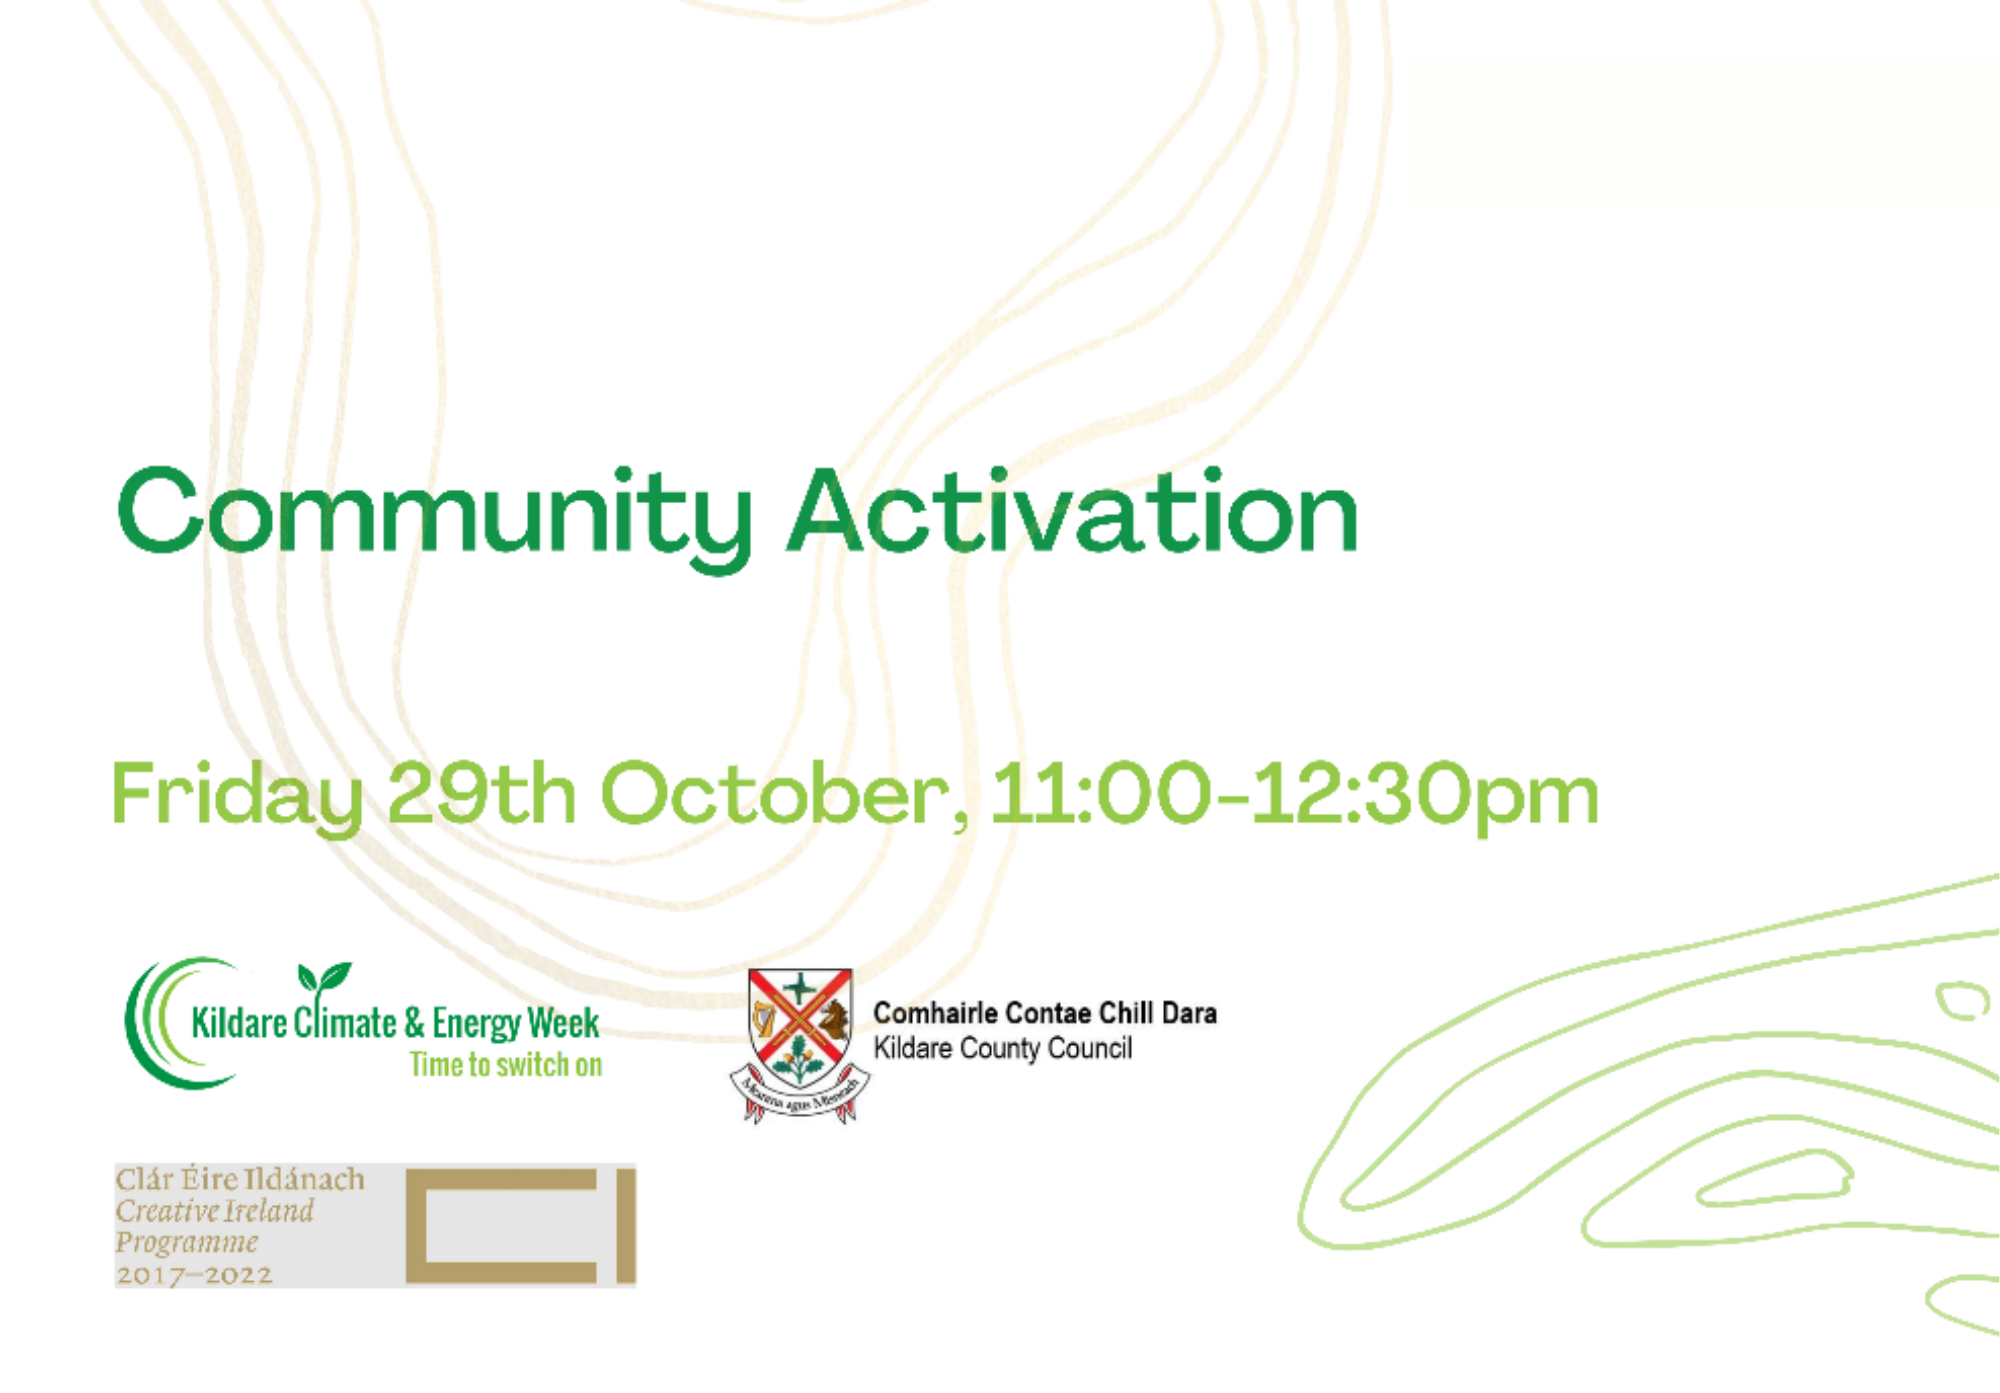 Community Activation Panel Discussion